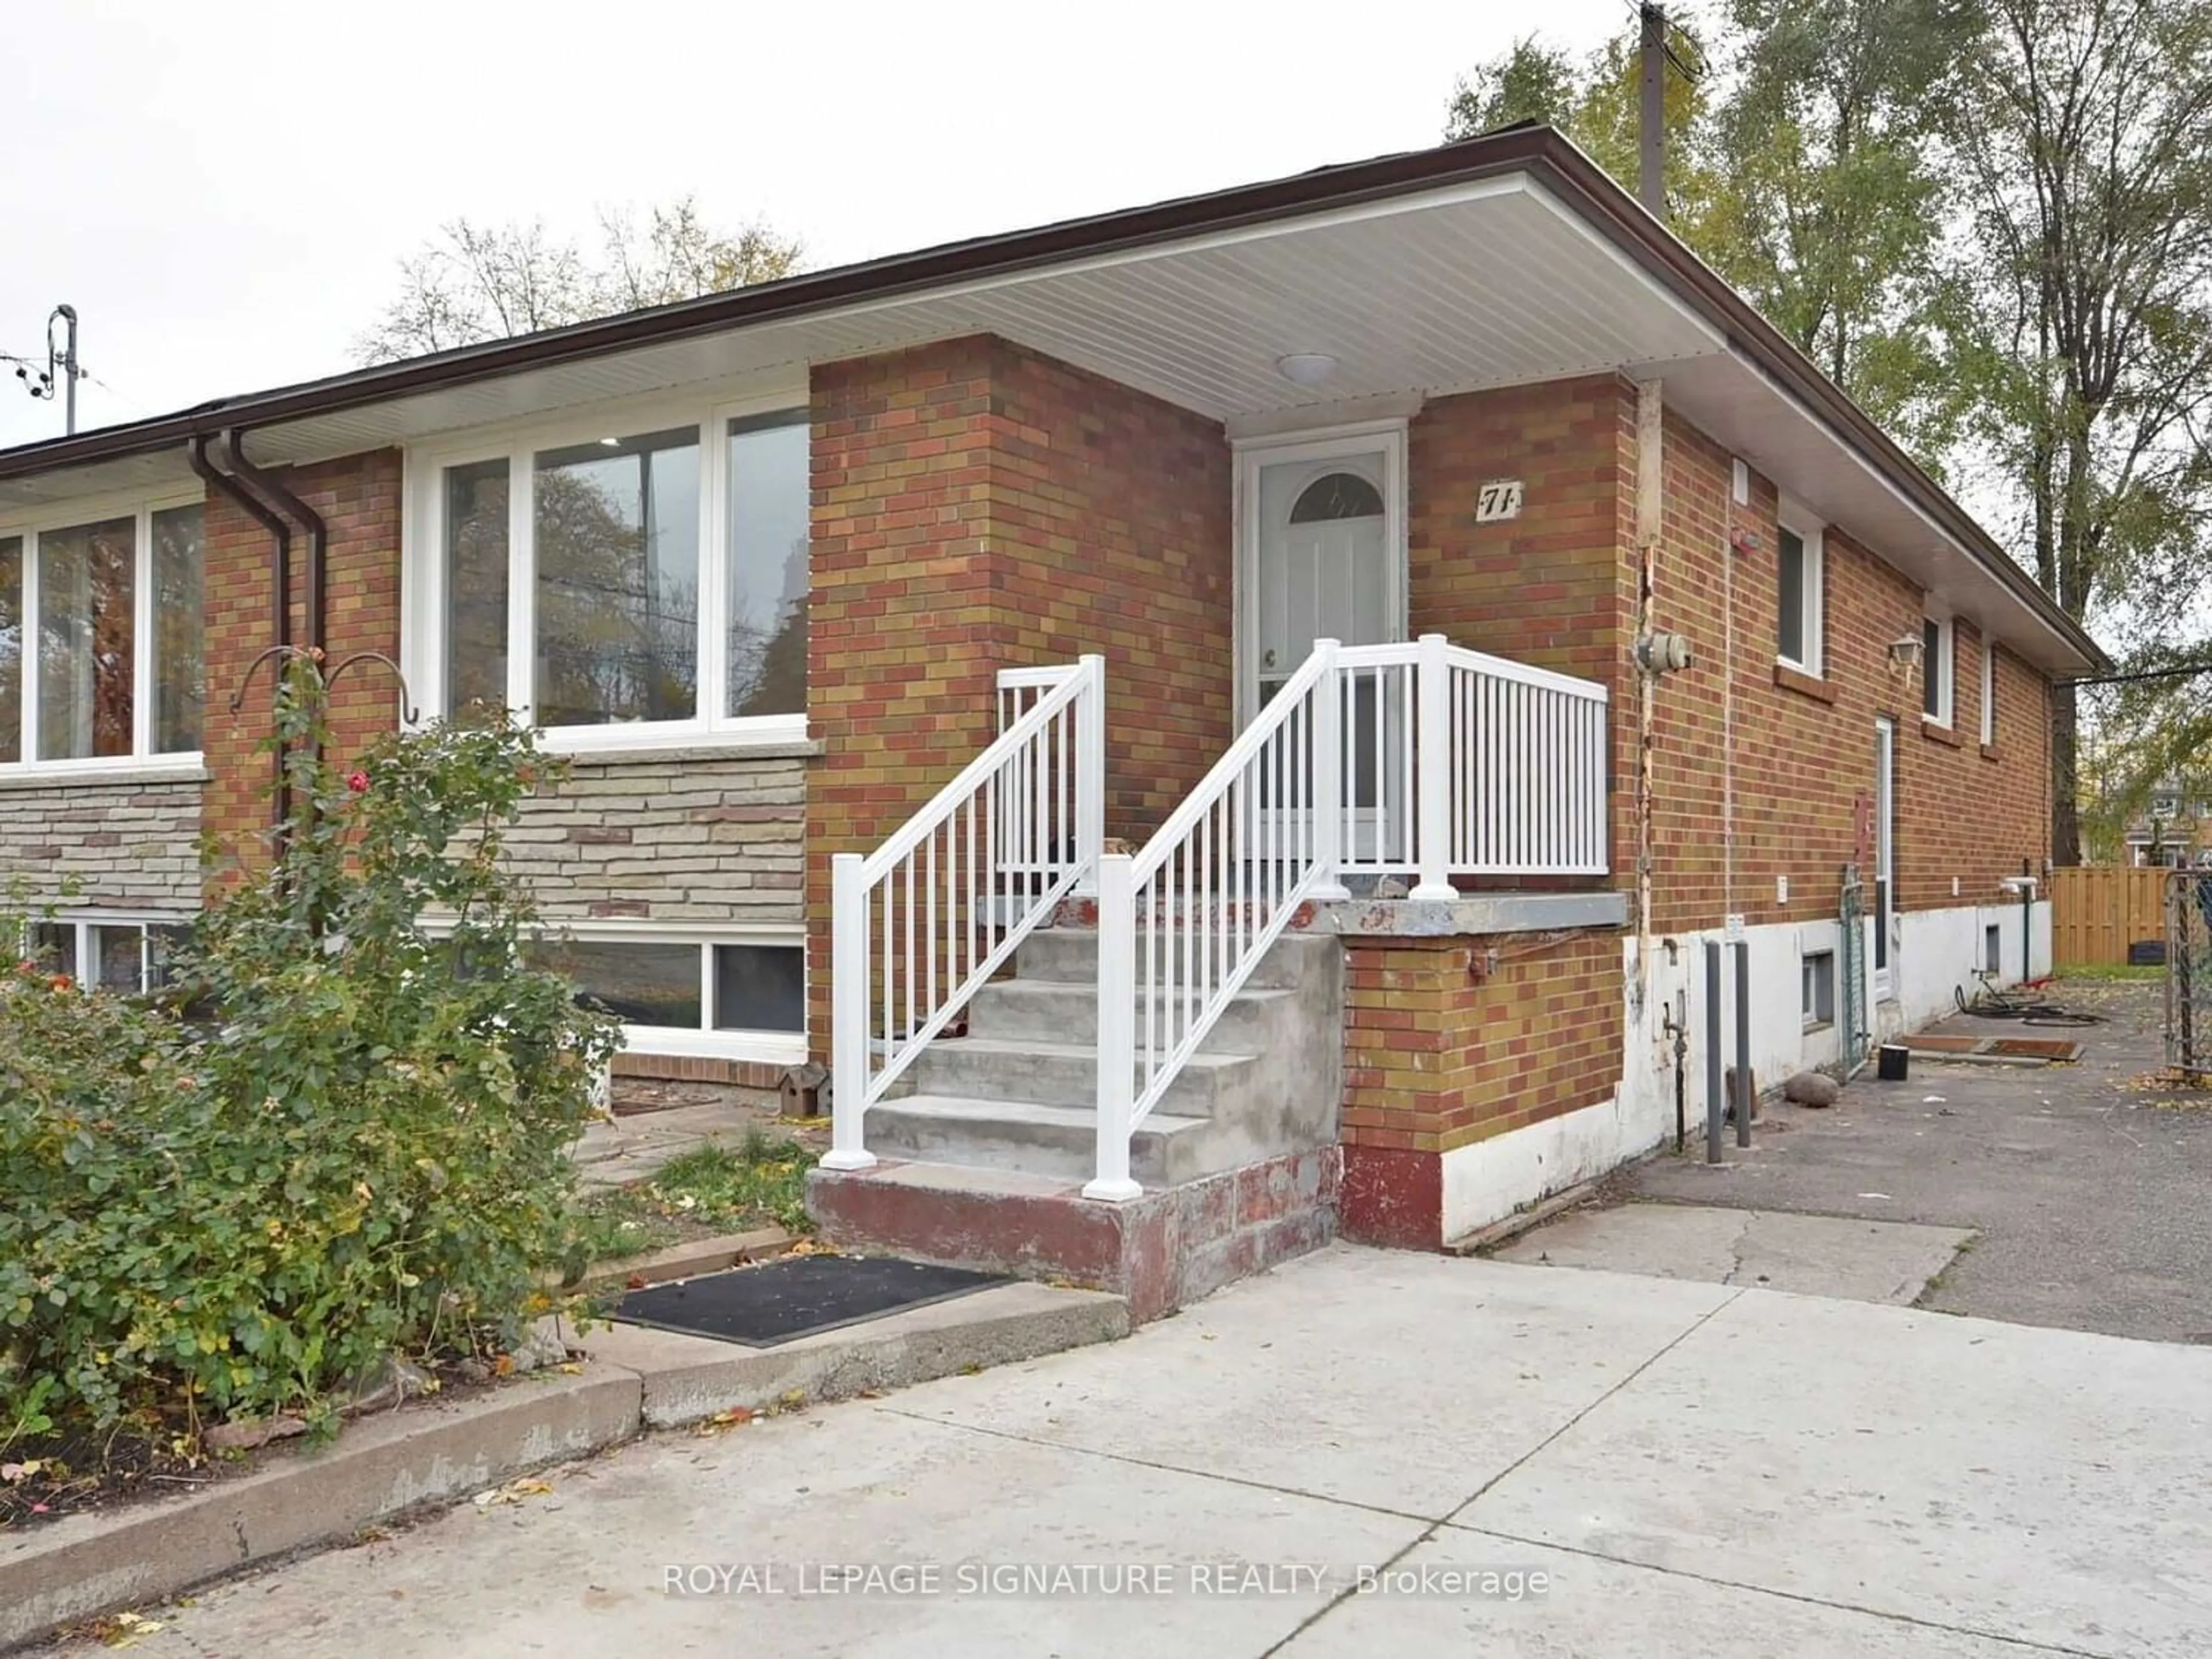 Home with brick exterior material for 71 Fortrose Cres, Toronto Ontario M3A 2H2